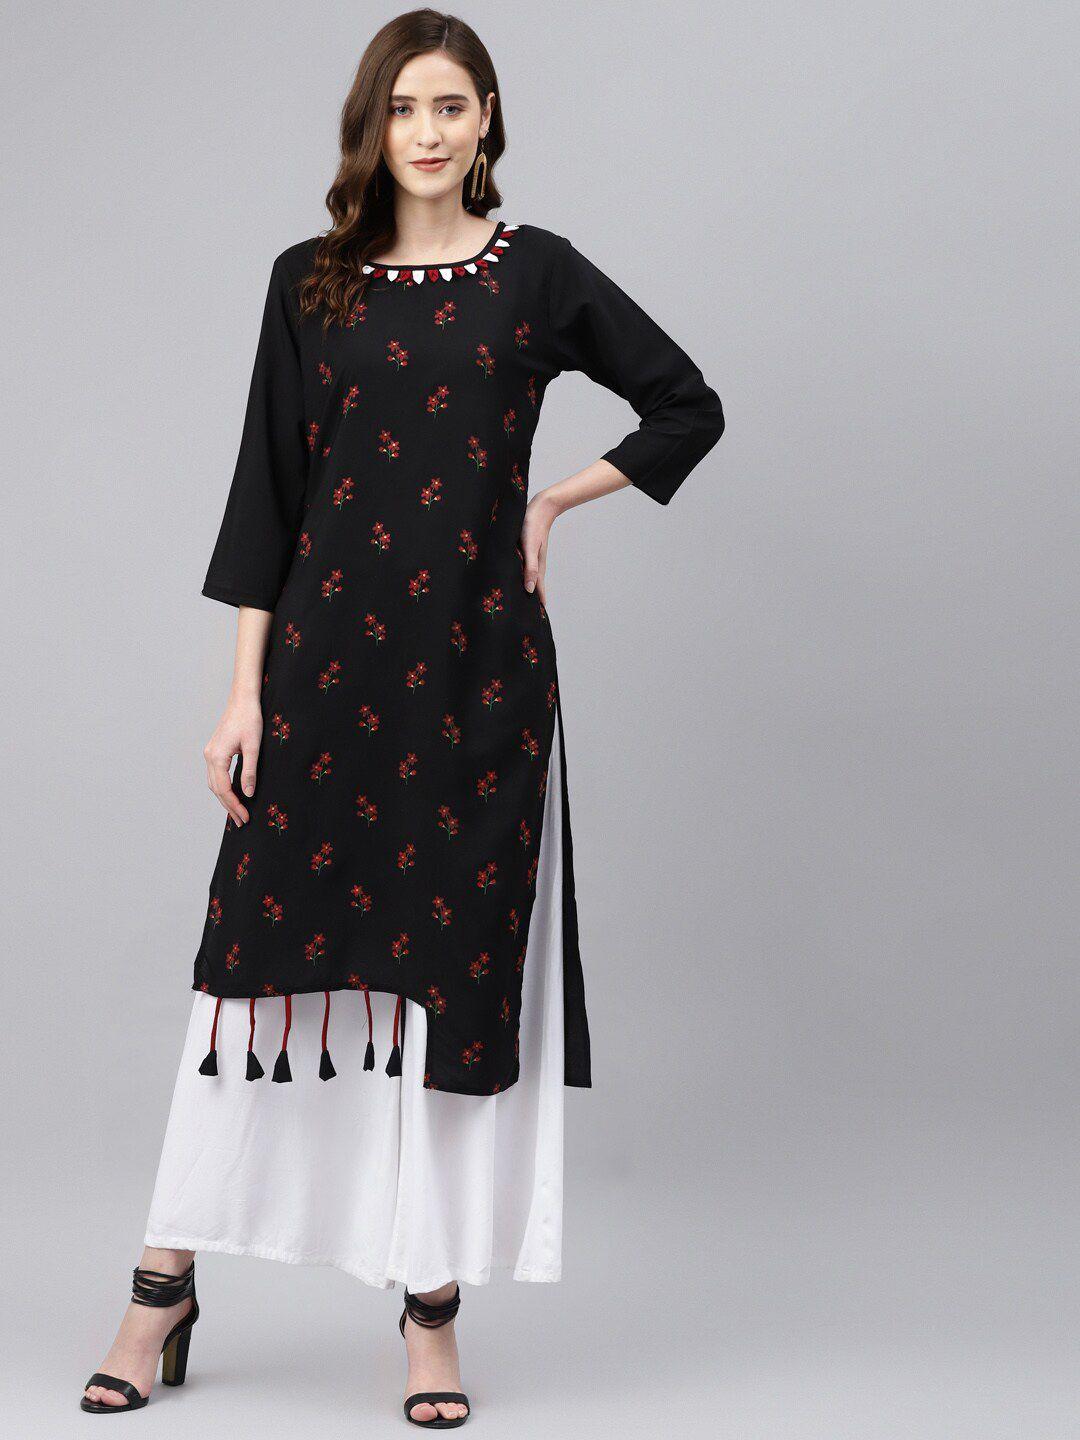 somras women black & red floral printed kurta